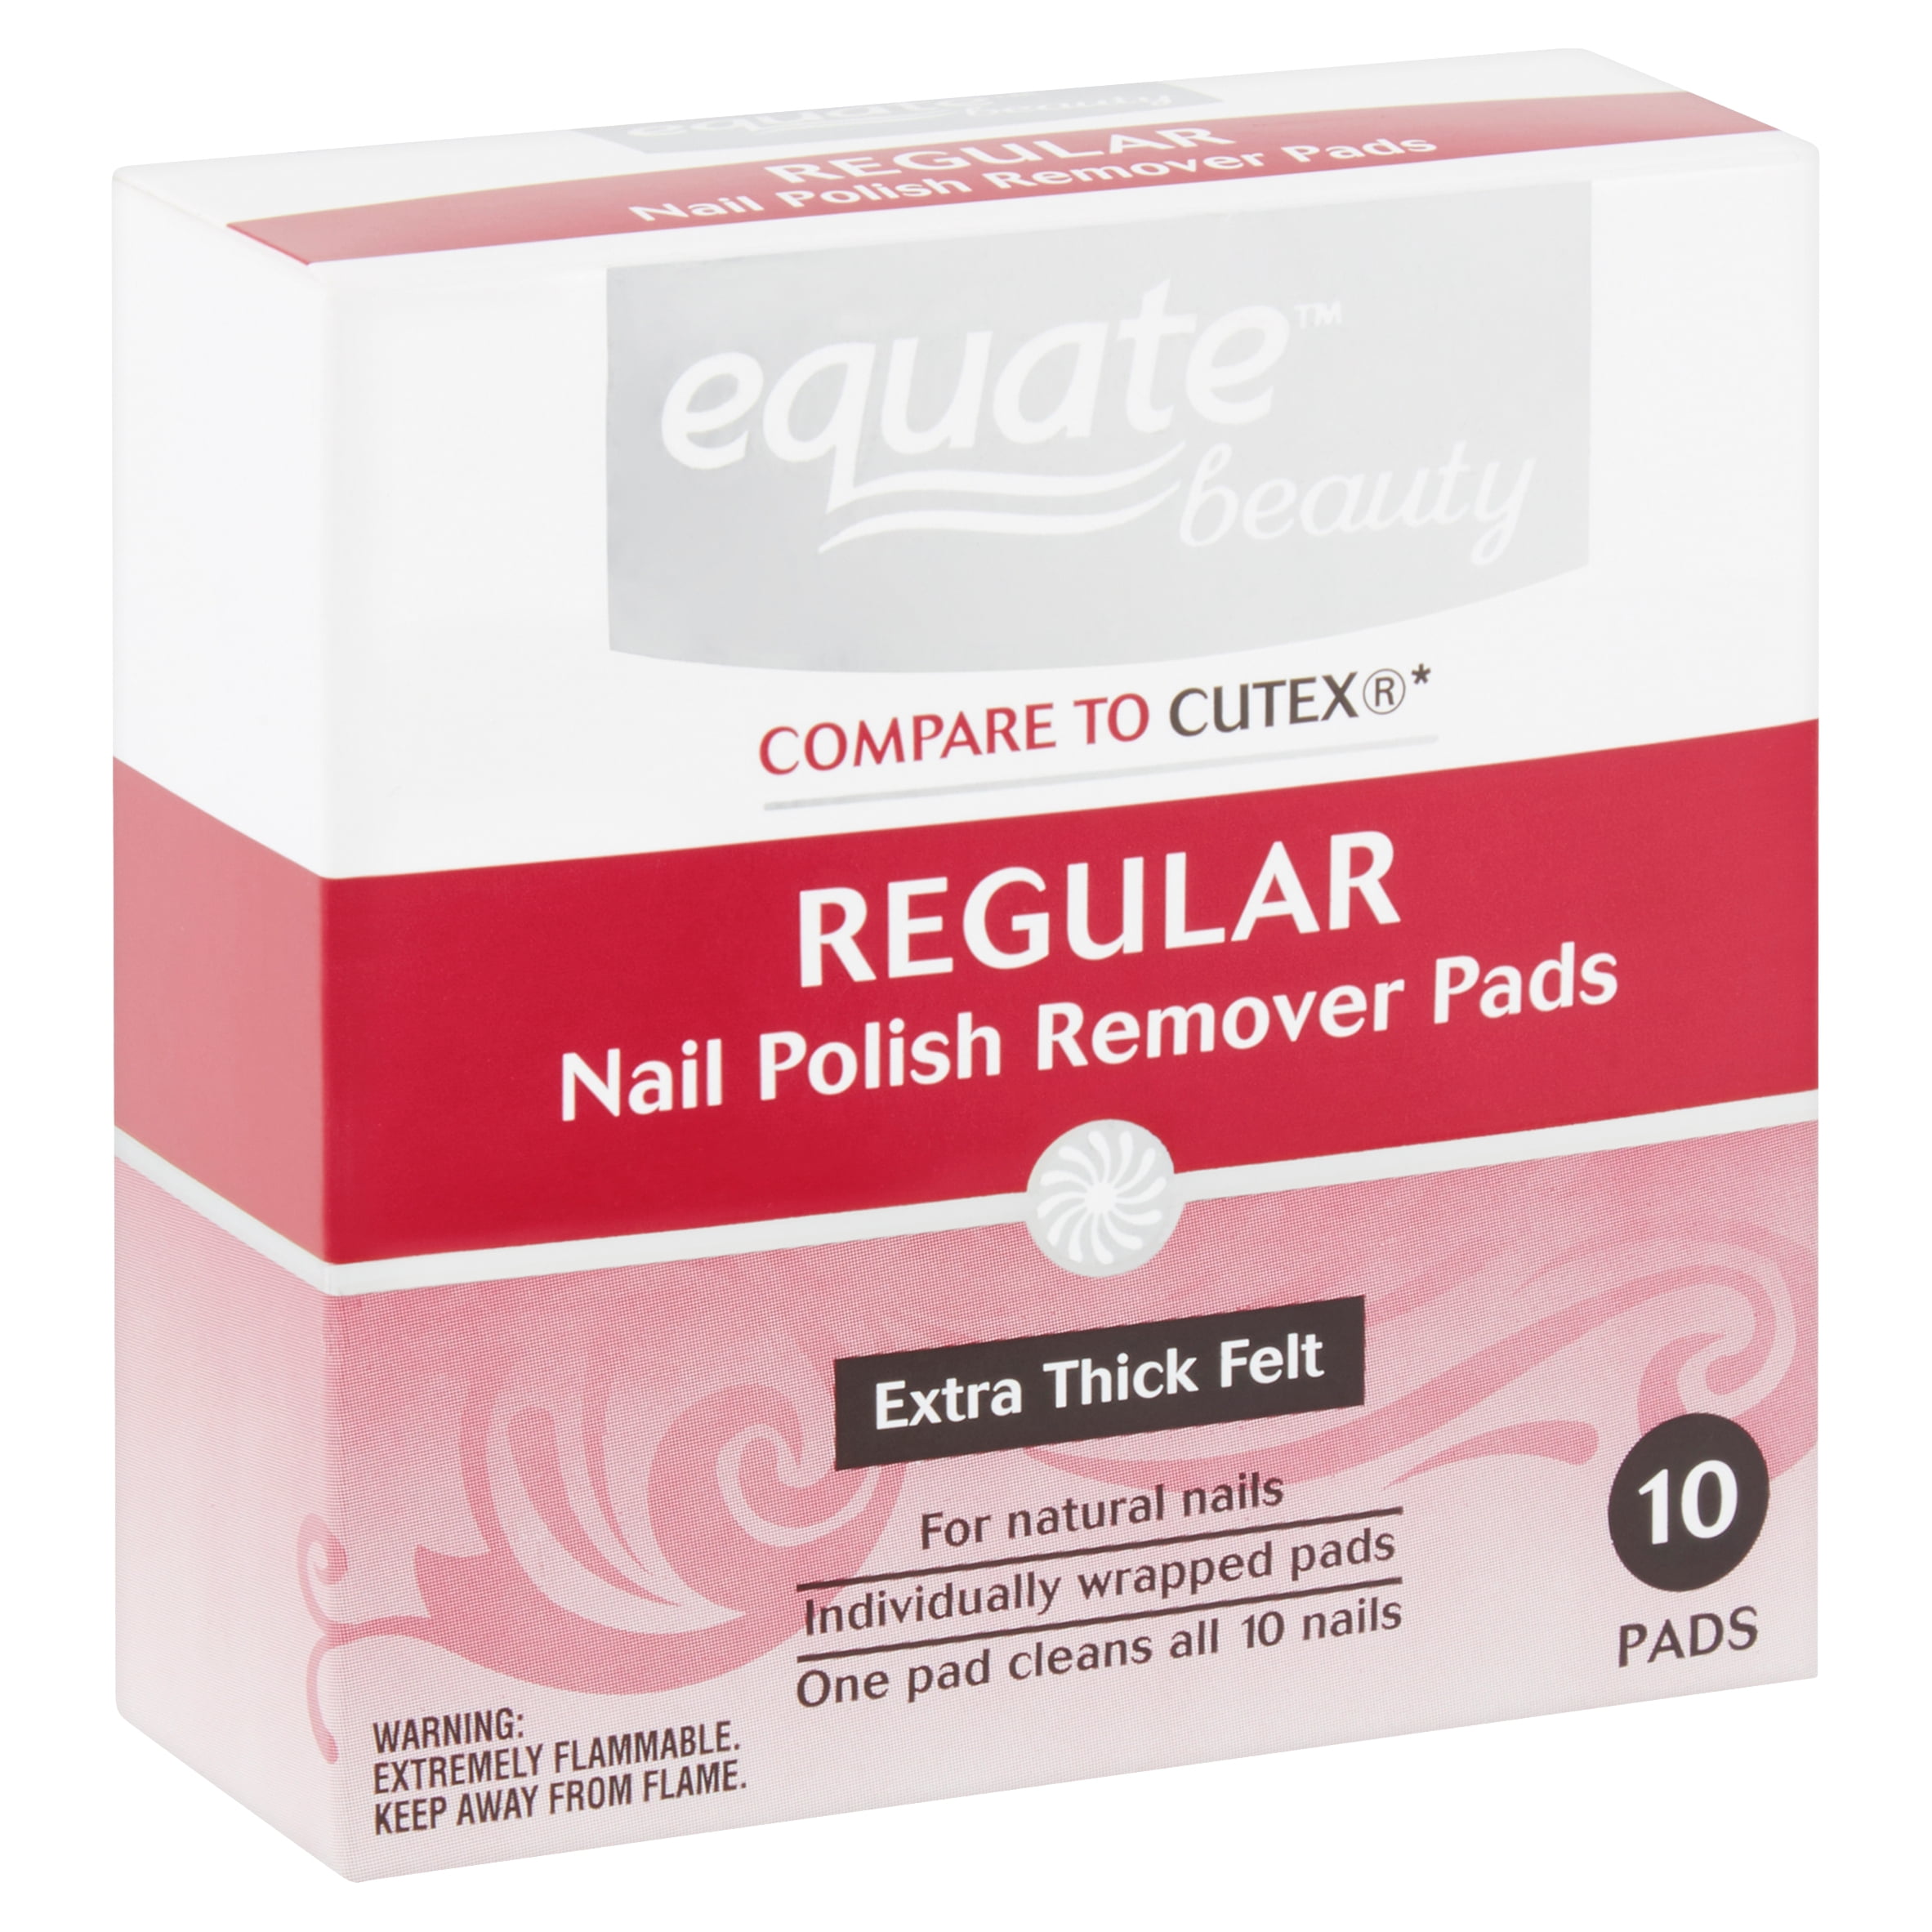 Cutex Care | Swipe & Go | Nail Polish Remover Pads ~ 10 Pads | eBay